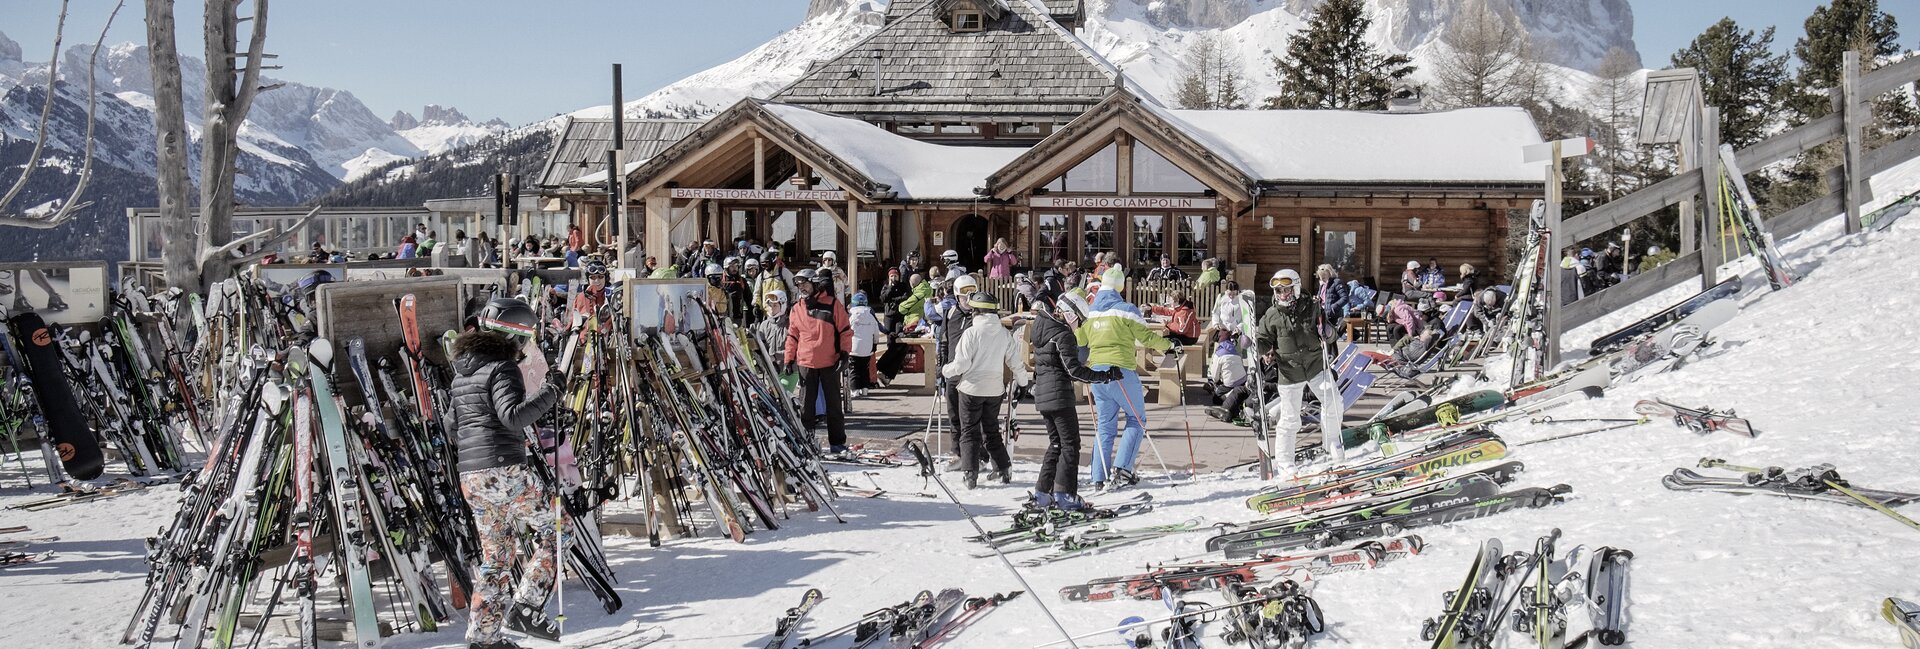 Val di Fassa - Canazei - Een winters juweel om te skiën